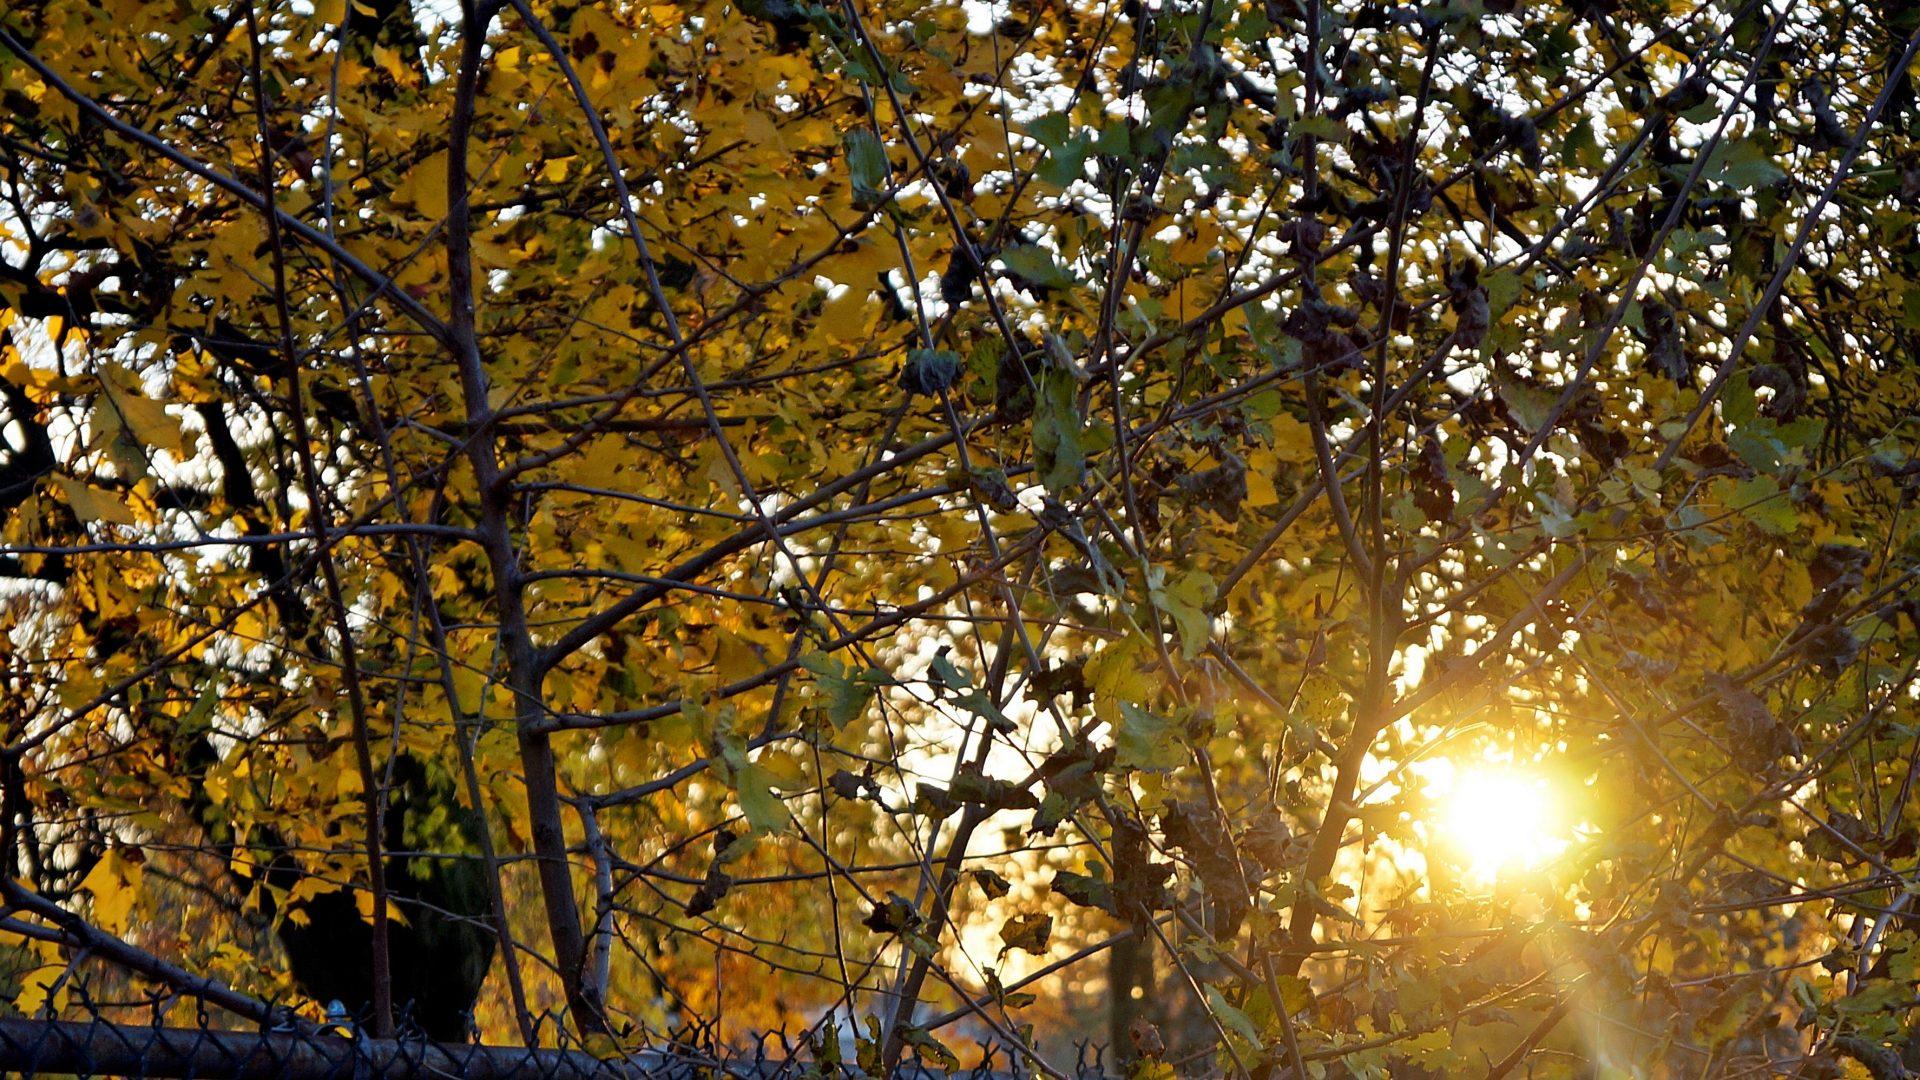 Macbook 13 Retina wallpaper: Sunny Glow Autumn